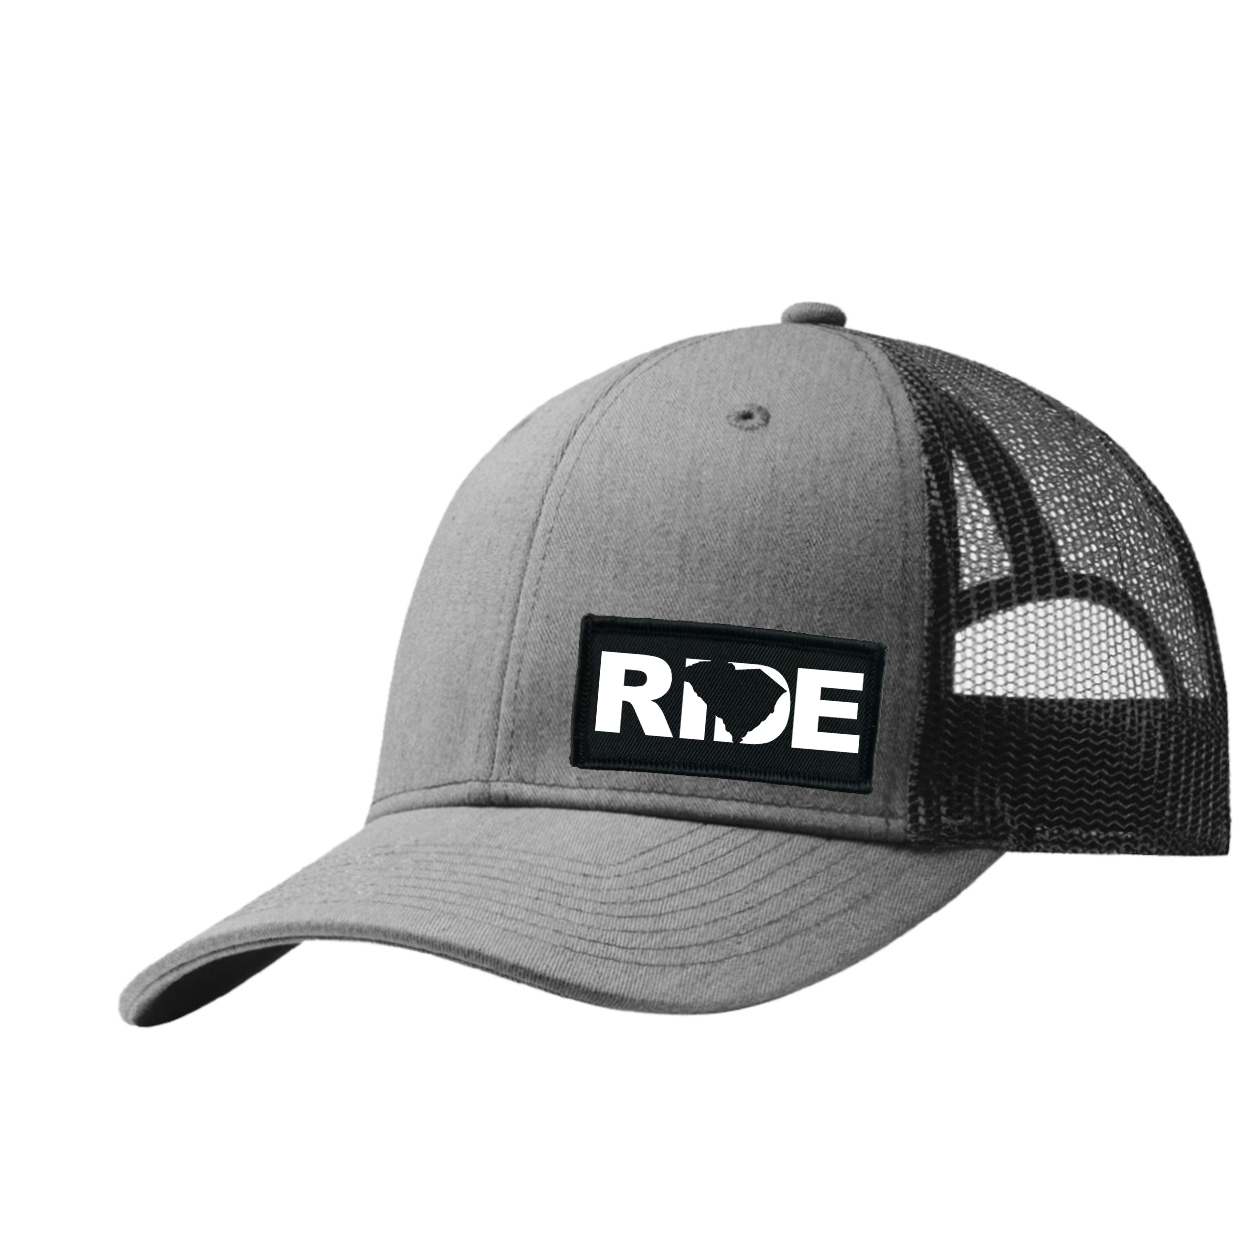 Ride South Carolina Night Out Woven Patch Snapback Trucker Hat Heather Gray/Black (White Logo)